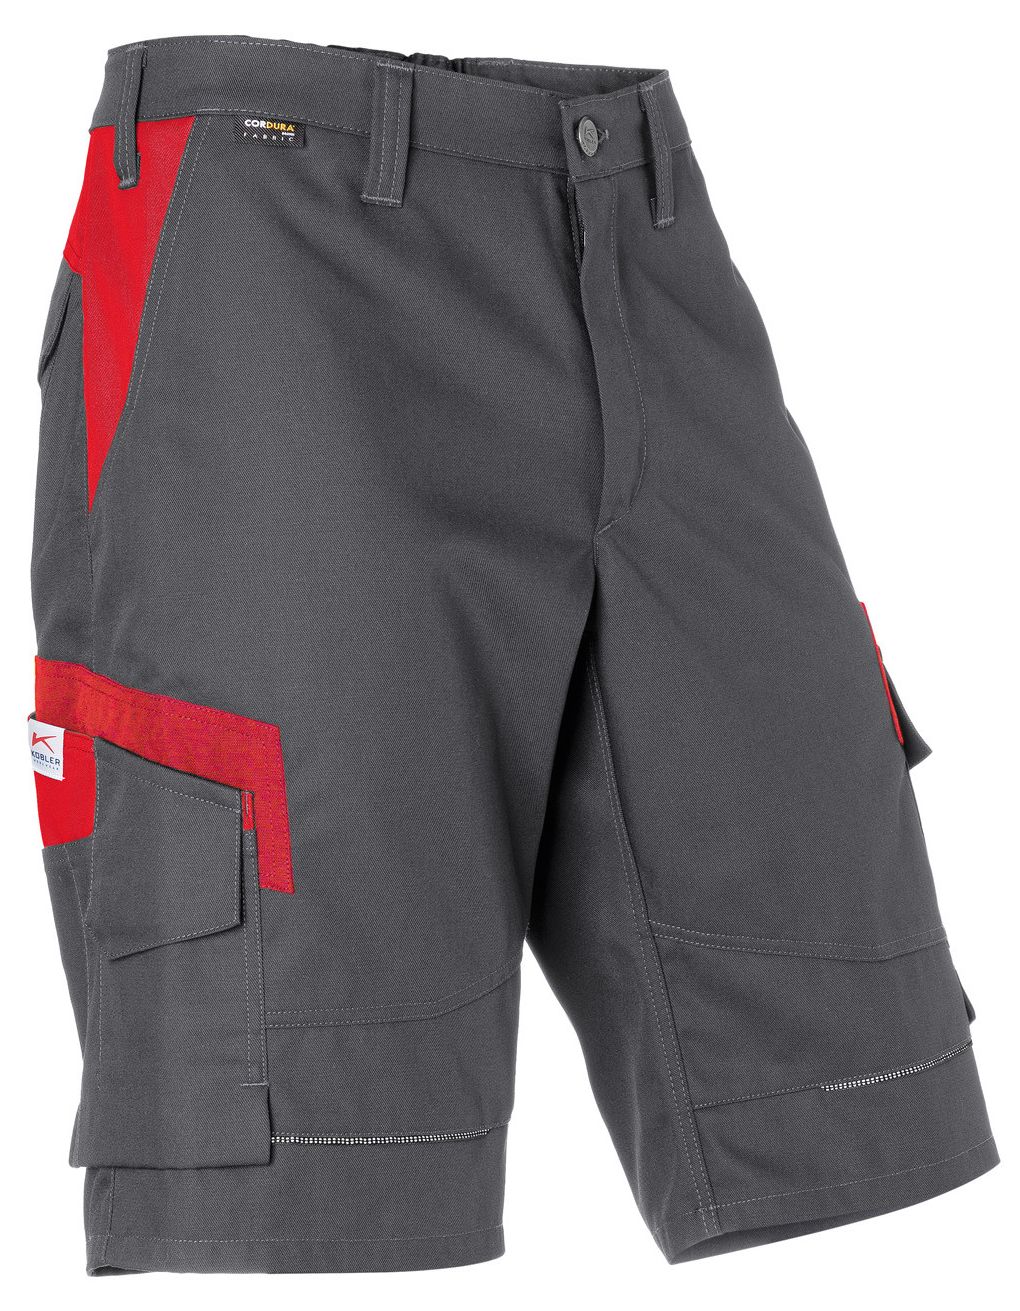 INNOVATIQ & | CAS-Technik - Industriebedarf Shorts | 2430 5370 Kübler Bekleidung Shorts | Arbeitsschutz